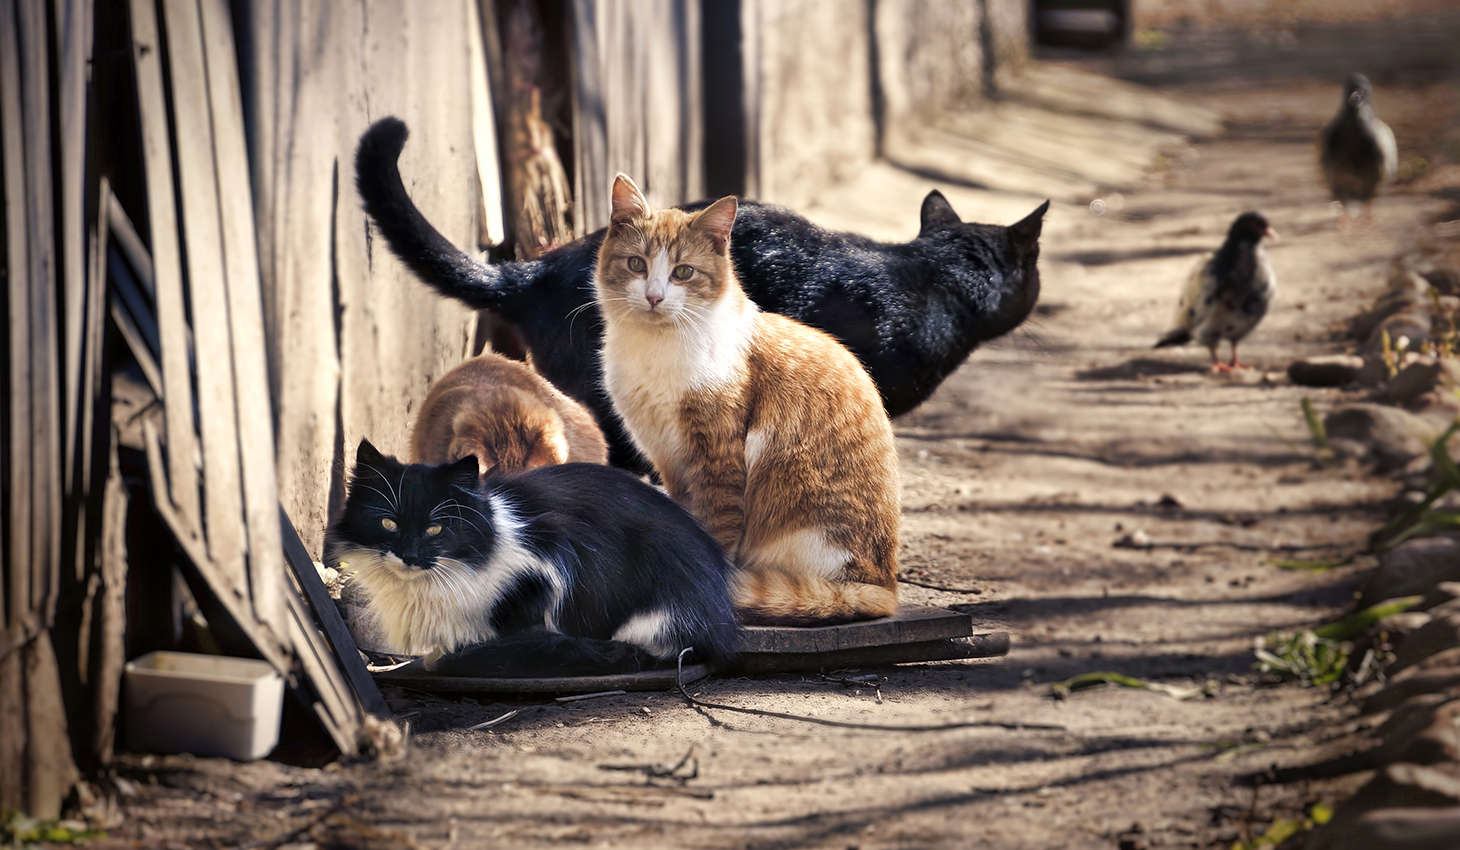 Nancy Segula Sentenced To 10 Days In Ohio Jail For Feeding Stray Cats The Washington Post